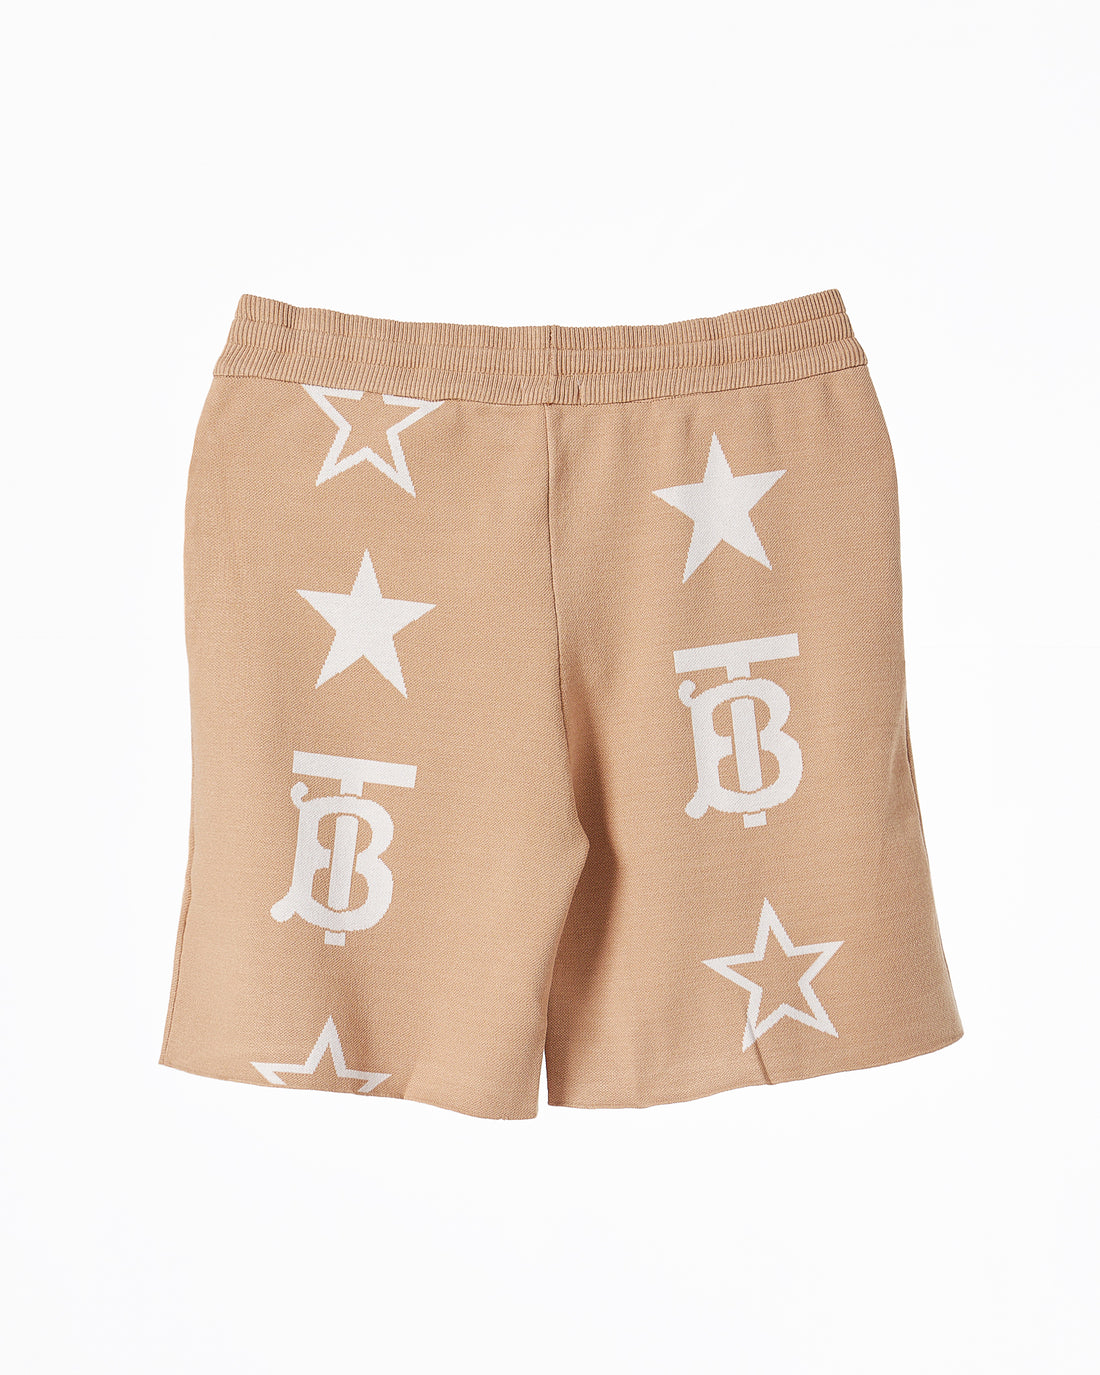 BUR Star Over Printed Men Brown Knit Shorts 69.90